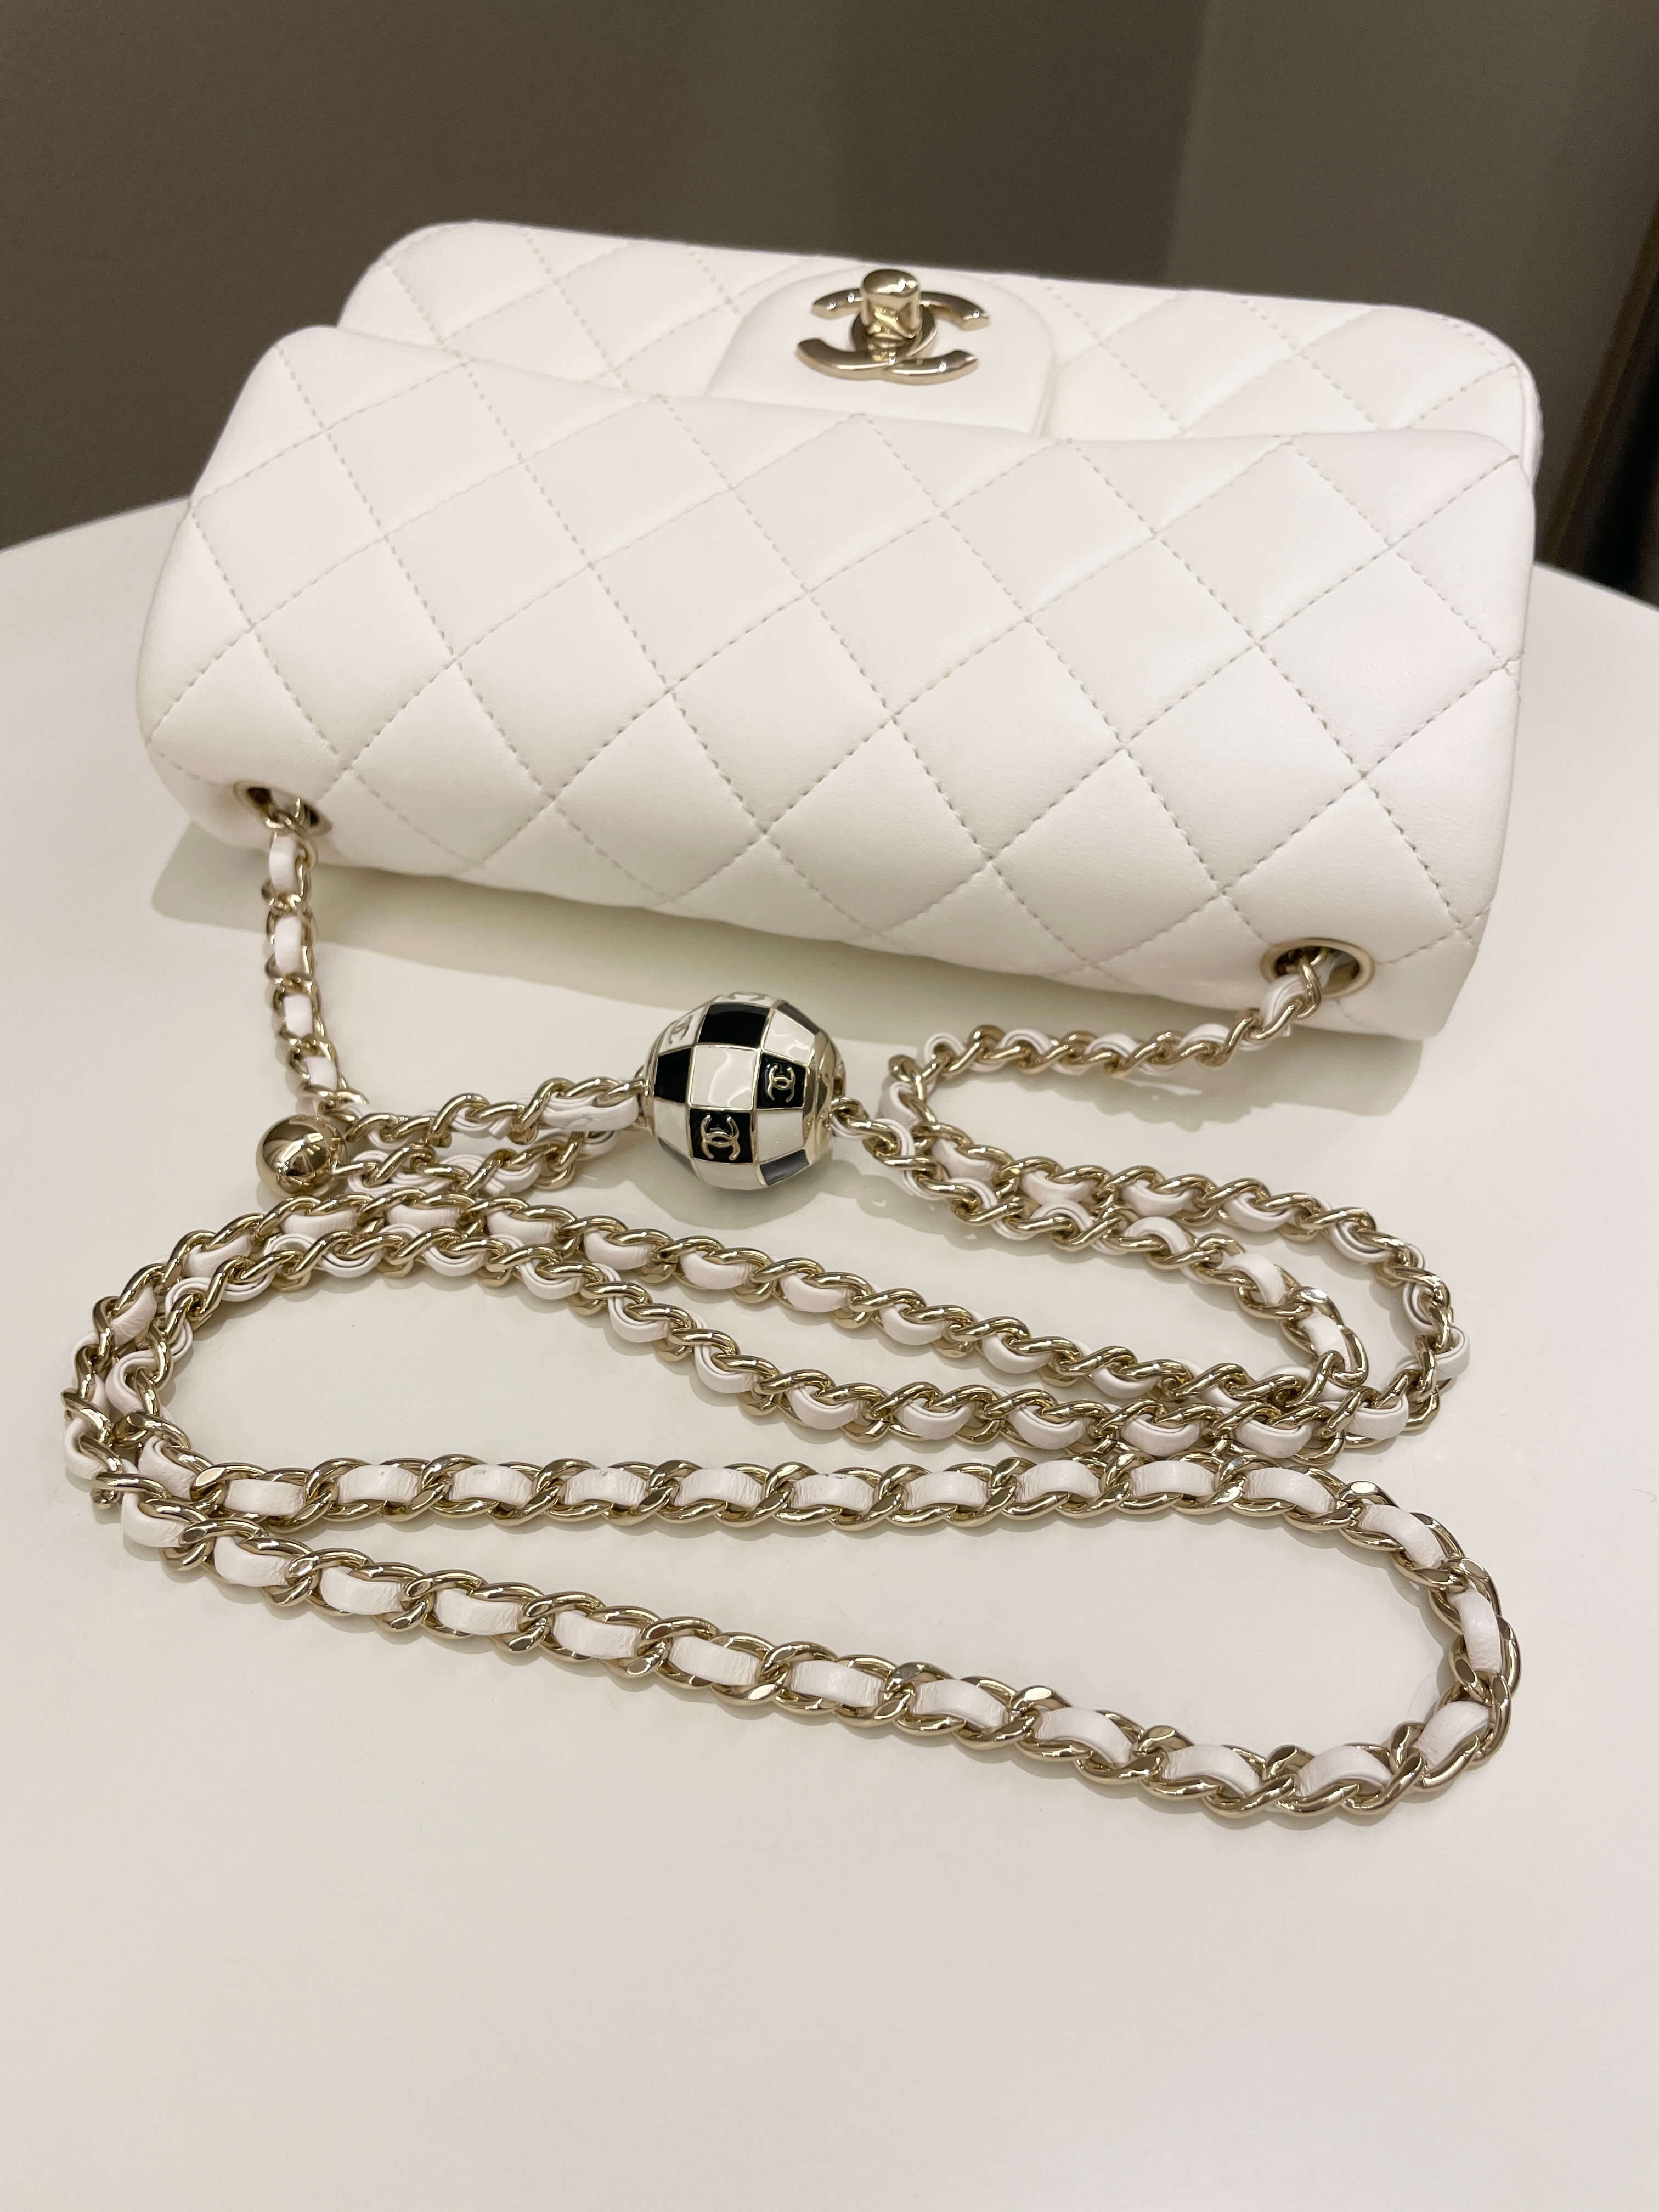 Chanel Pearl Crush Quilted Mini Rectangular
Ivory Stiff Lambskin